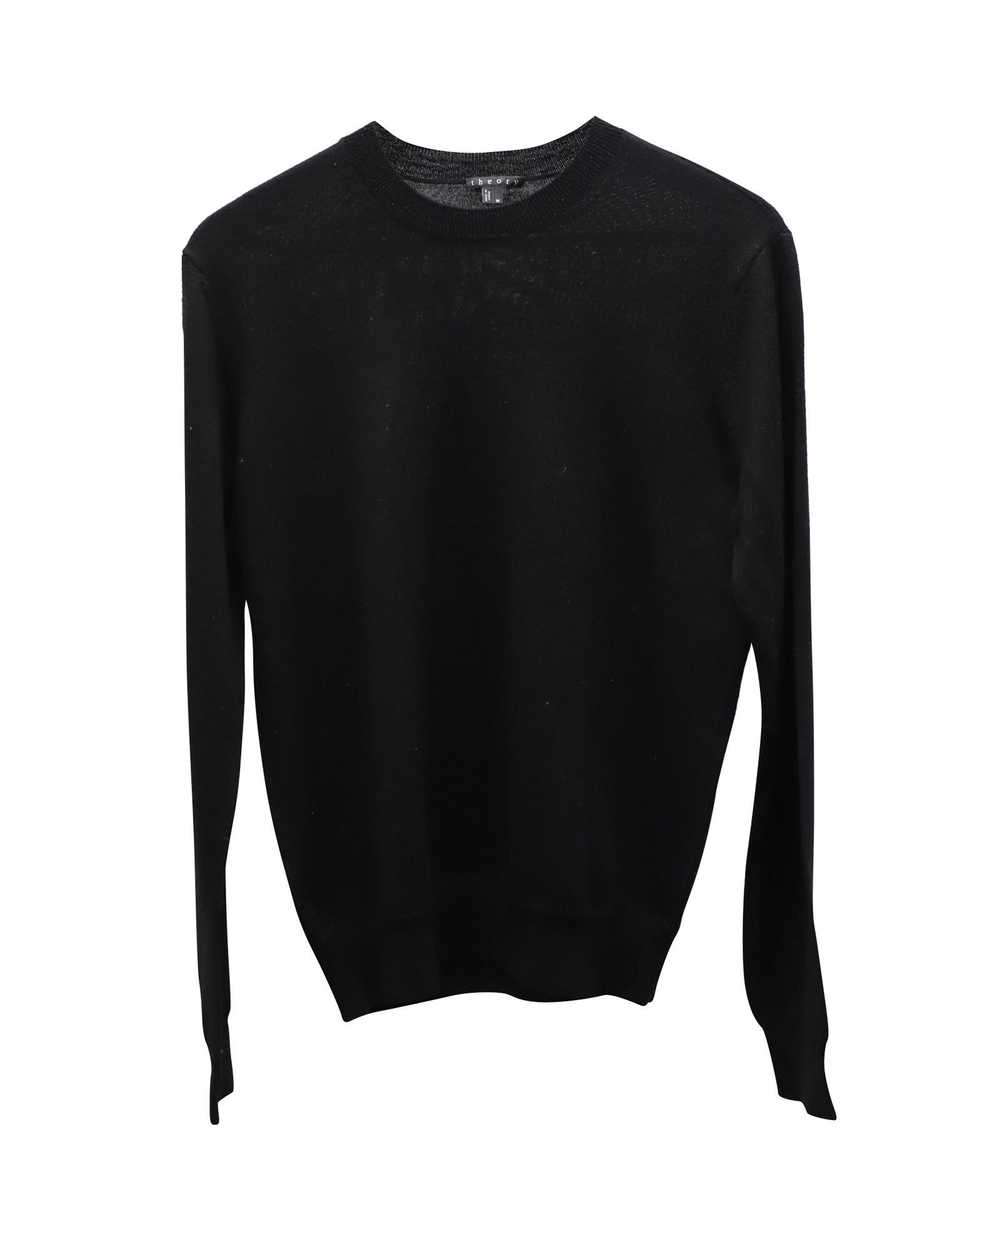 Theory Classic Black Wool Crewneck Sweater - image 1